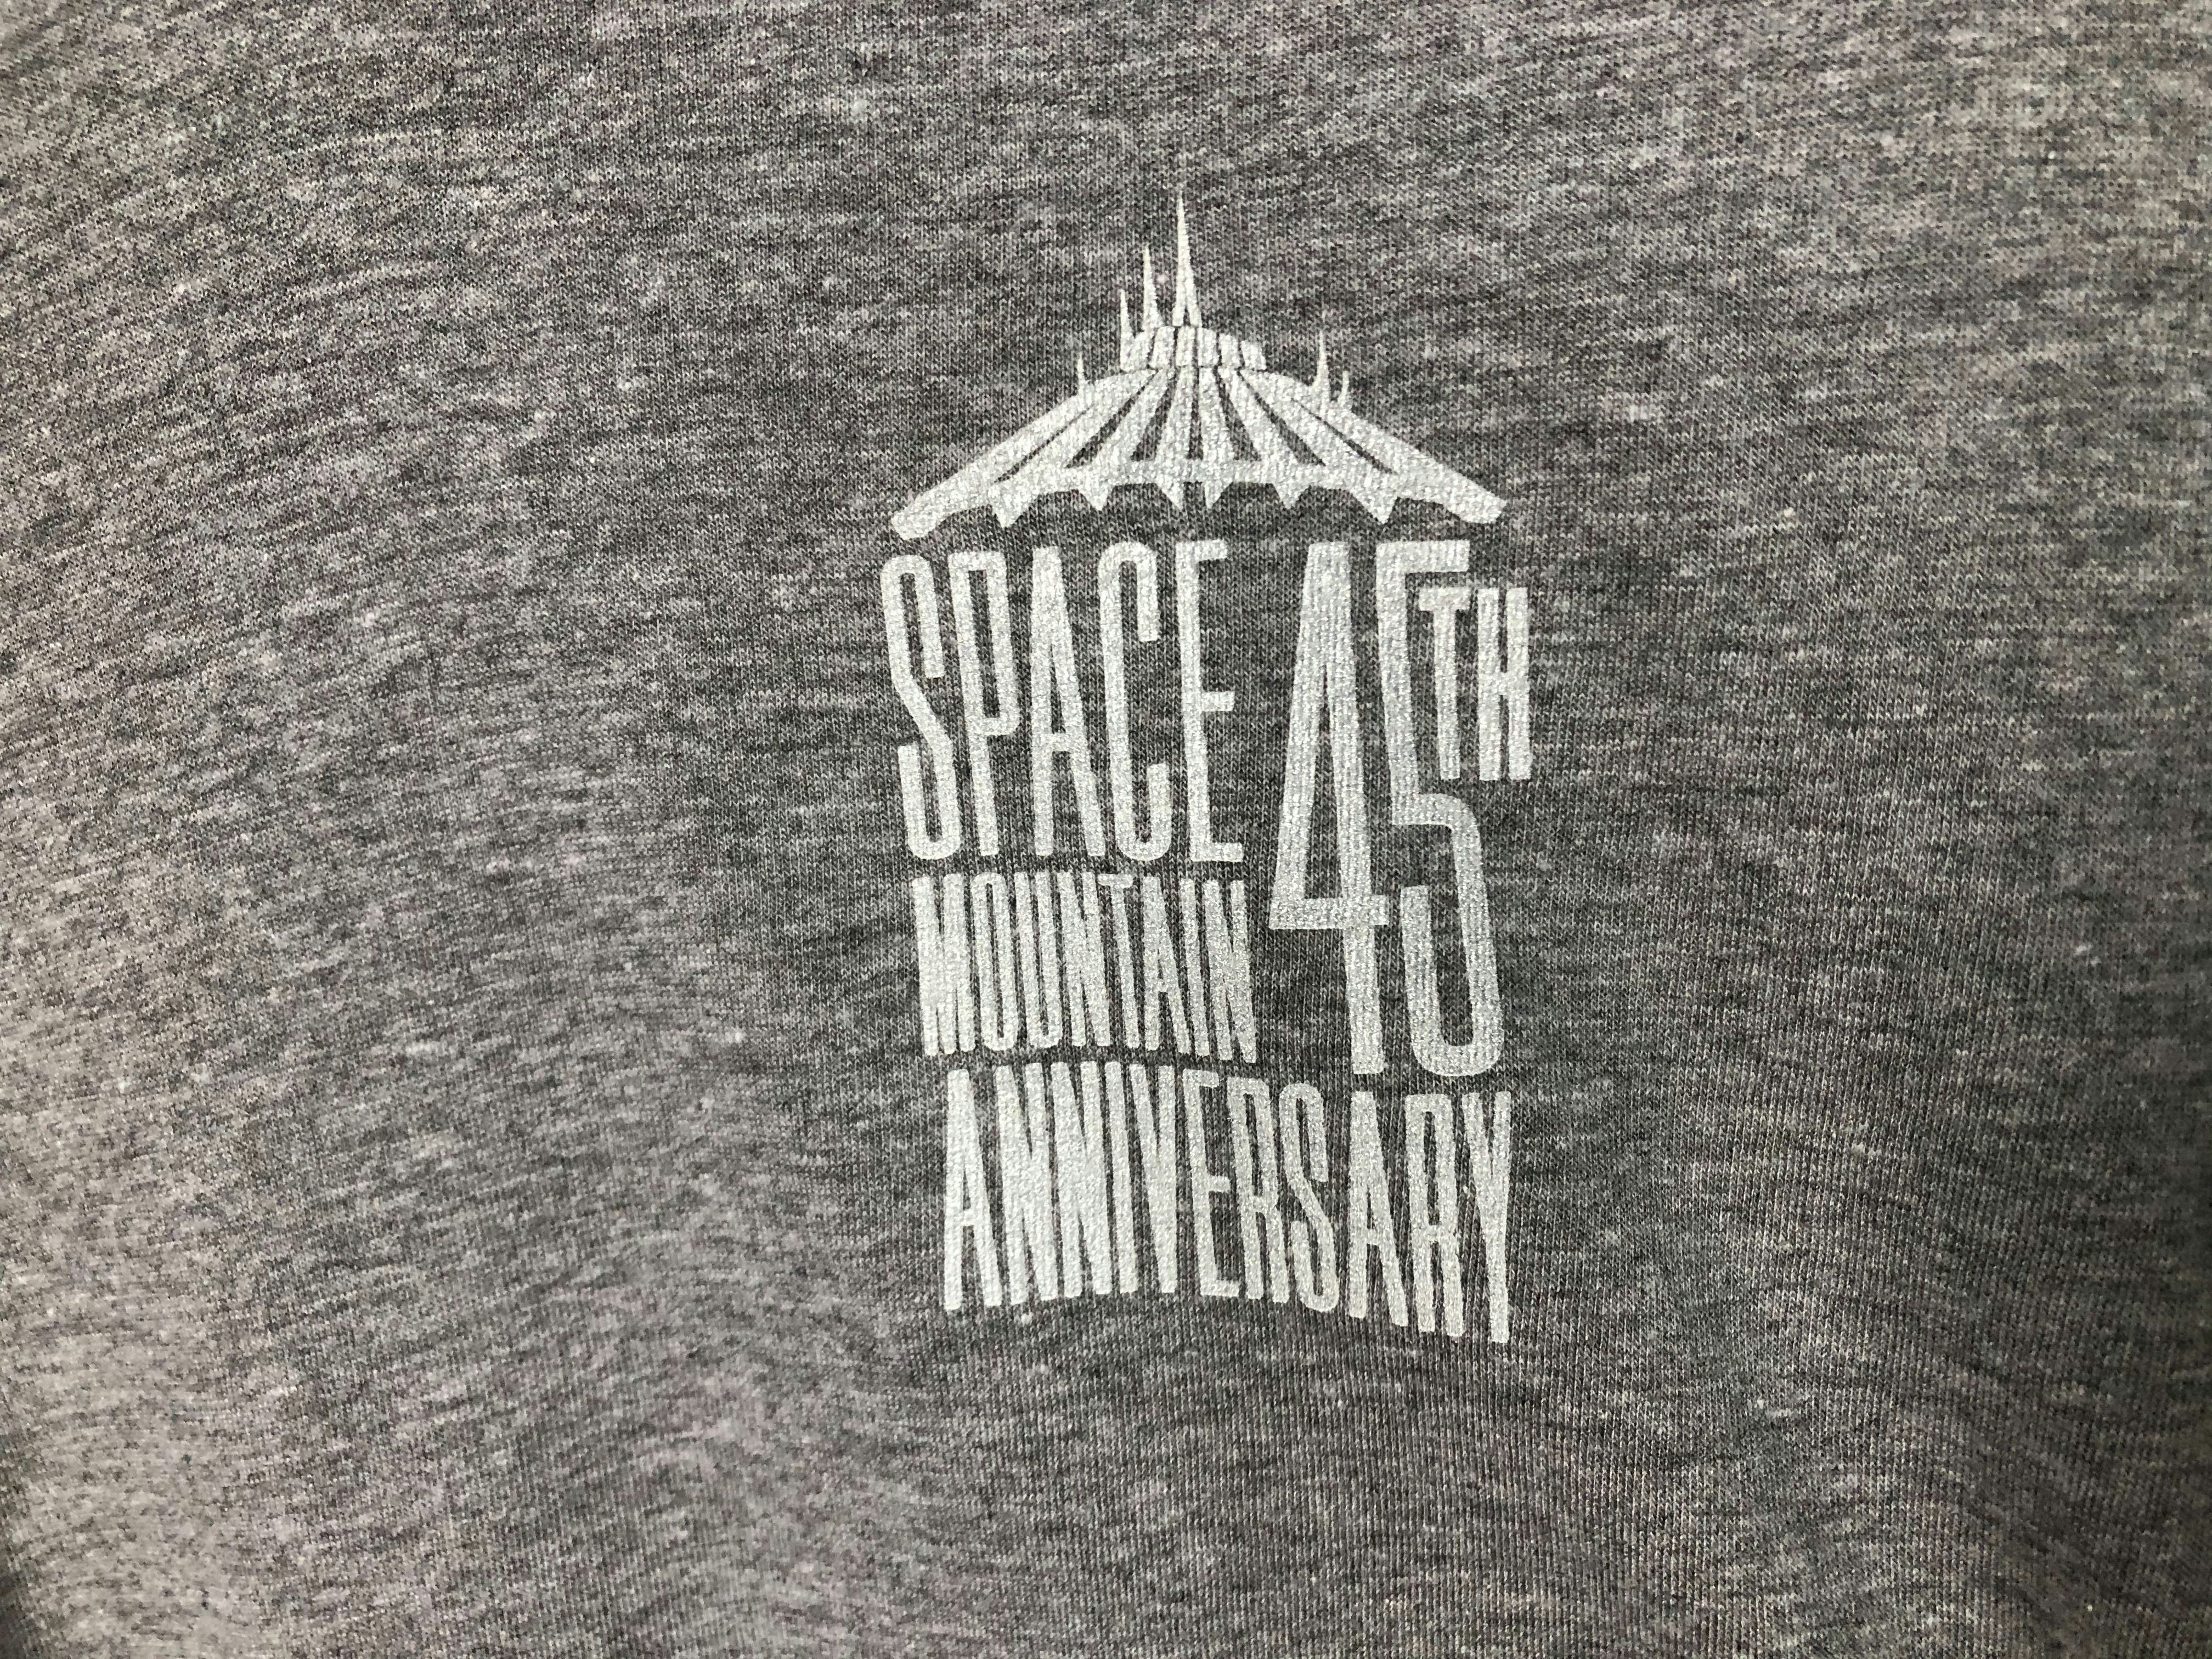 space mountain carousel of progress 45th anniversary merchandise 2020 34.jpg?auto=compress%2Cformat&ixlib=php 1.2